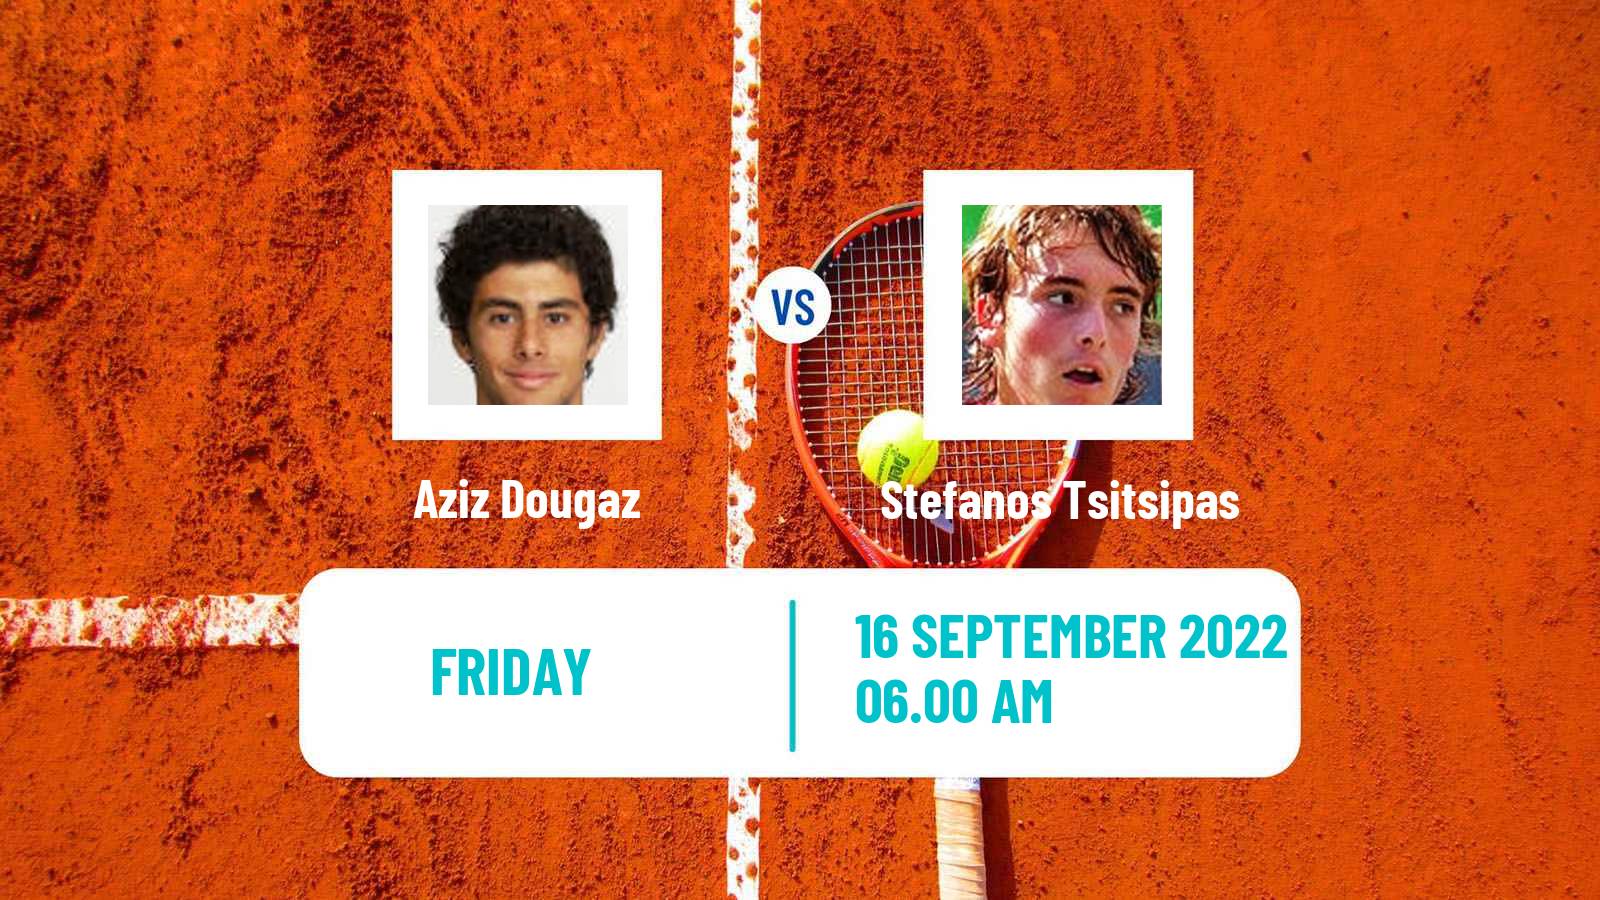 Tennis Davis Cup World Group II Aziz Dougaz - Stefanos Tsitsipas